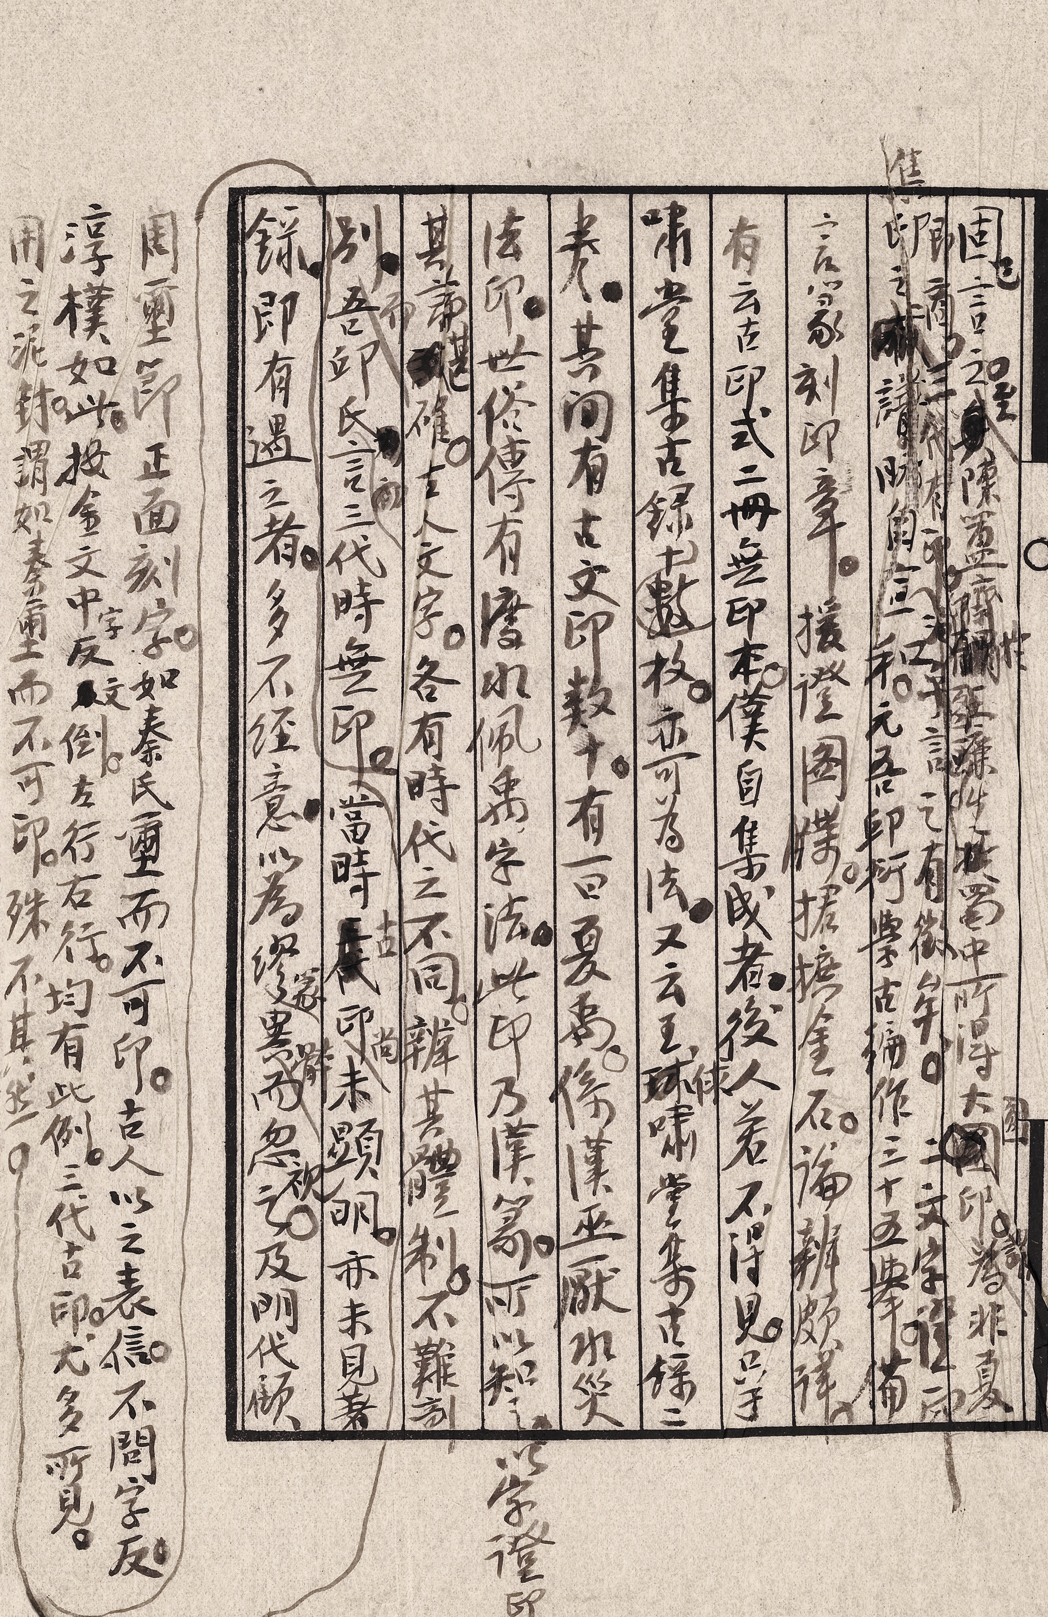 1939 Manuscript of Huang Binhong's "Three Generations of Pictures in Ancient Seals" (part)